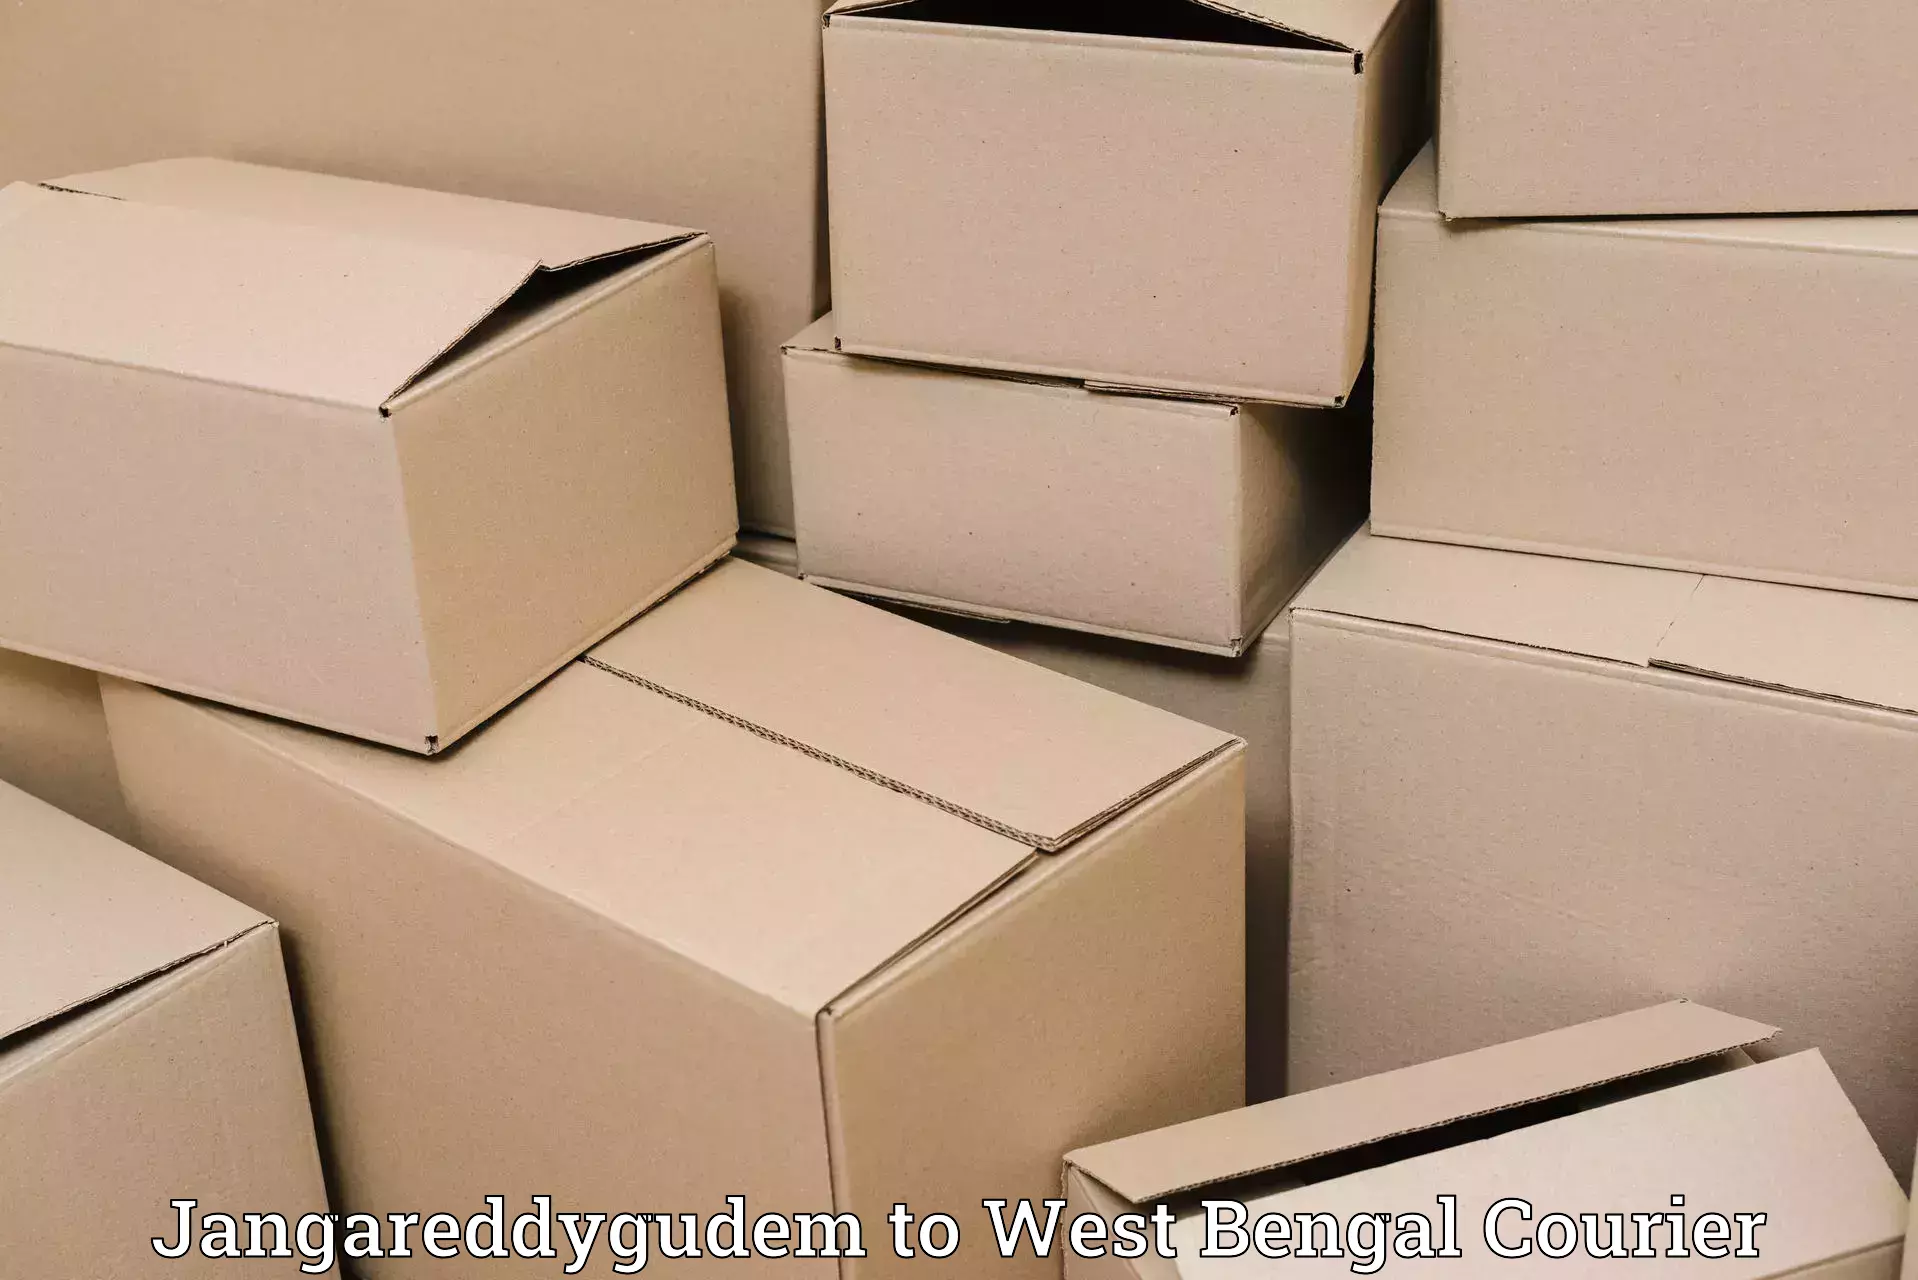 Business shipping needs Jangareddygudem to Nadia